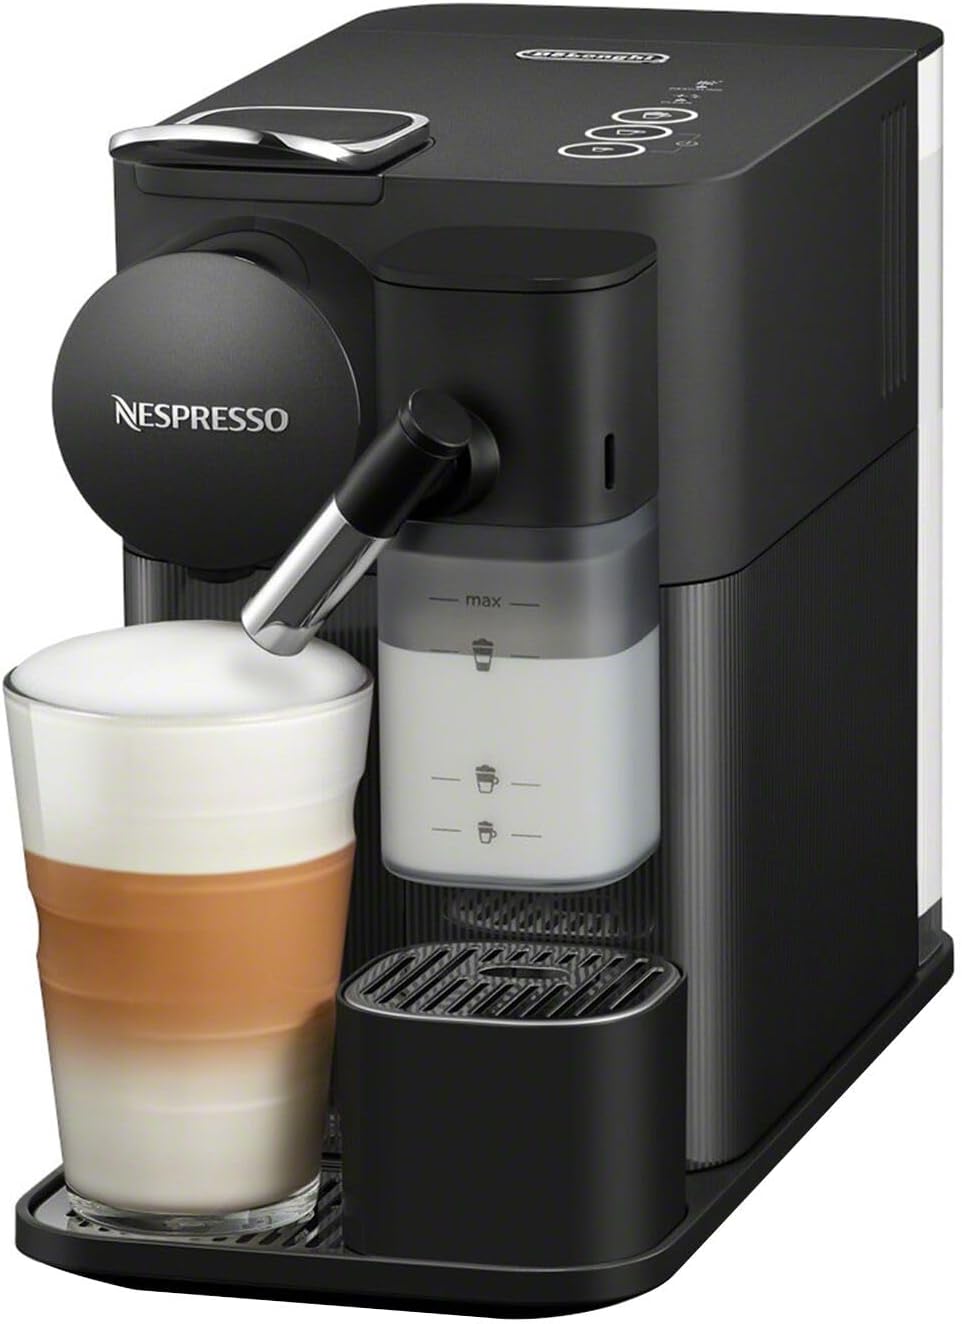 Nespresso Lattissima One Original Espresso Machine with Milk Frother by DeLonghi, Shadow Black